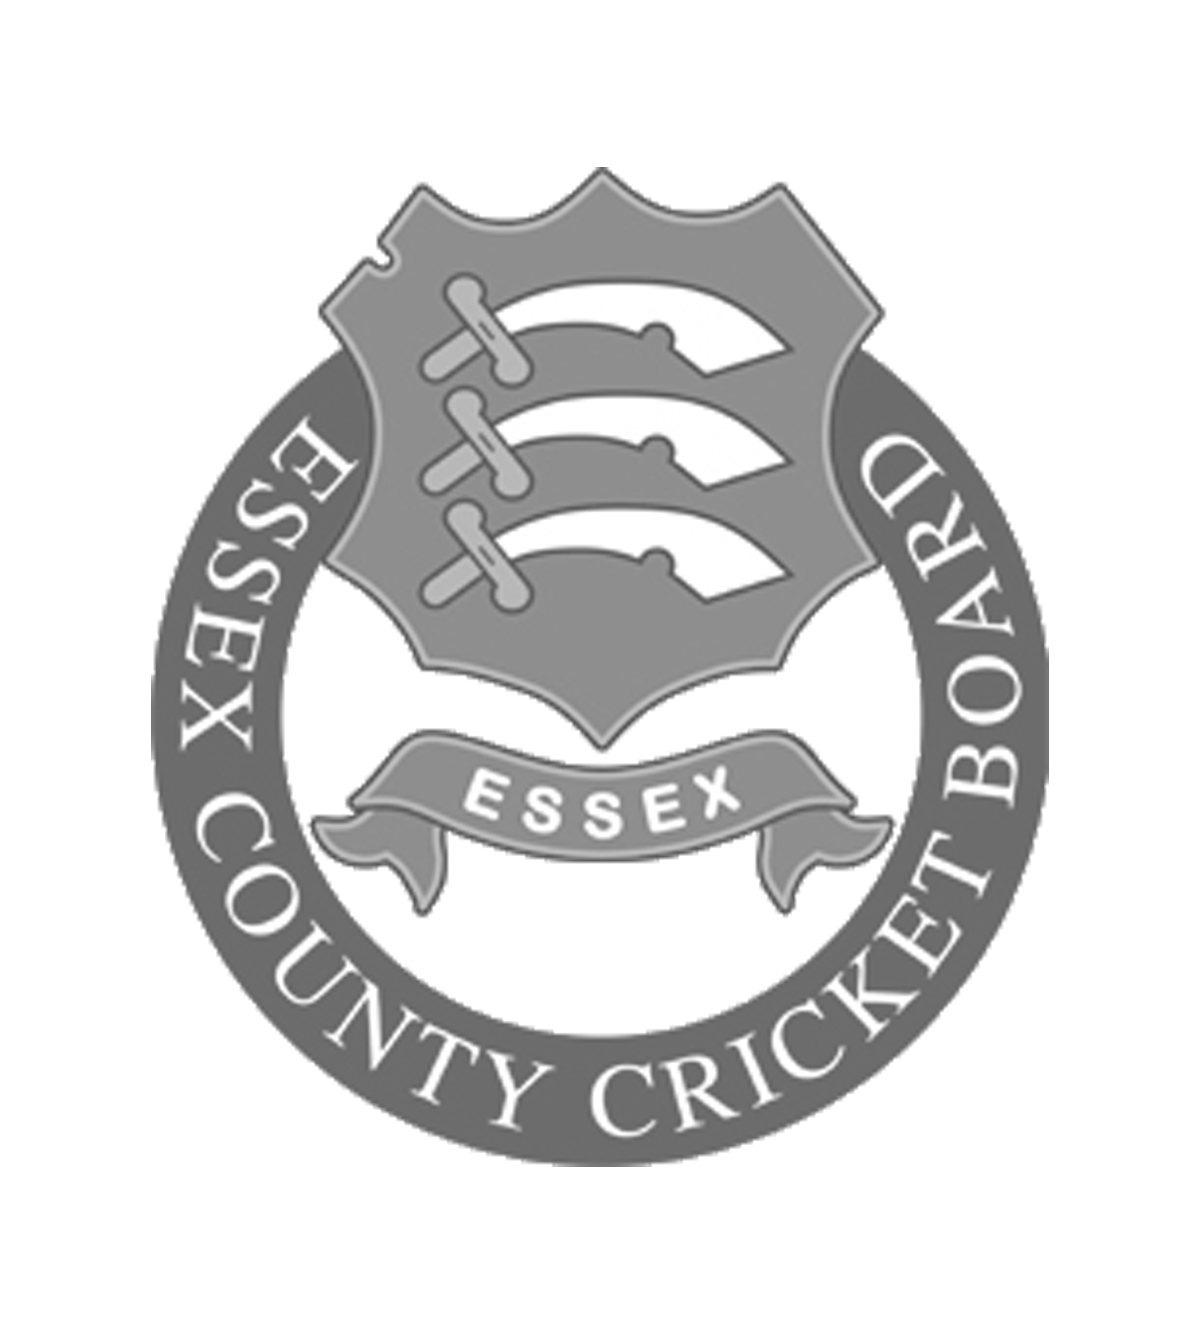 Essex Cricket Club